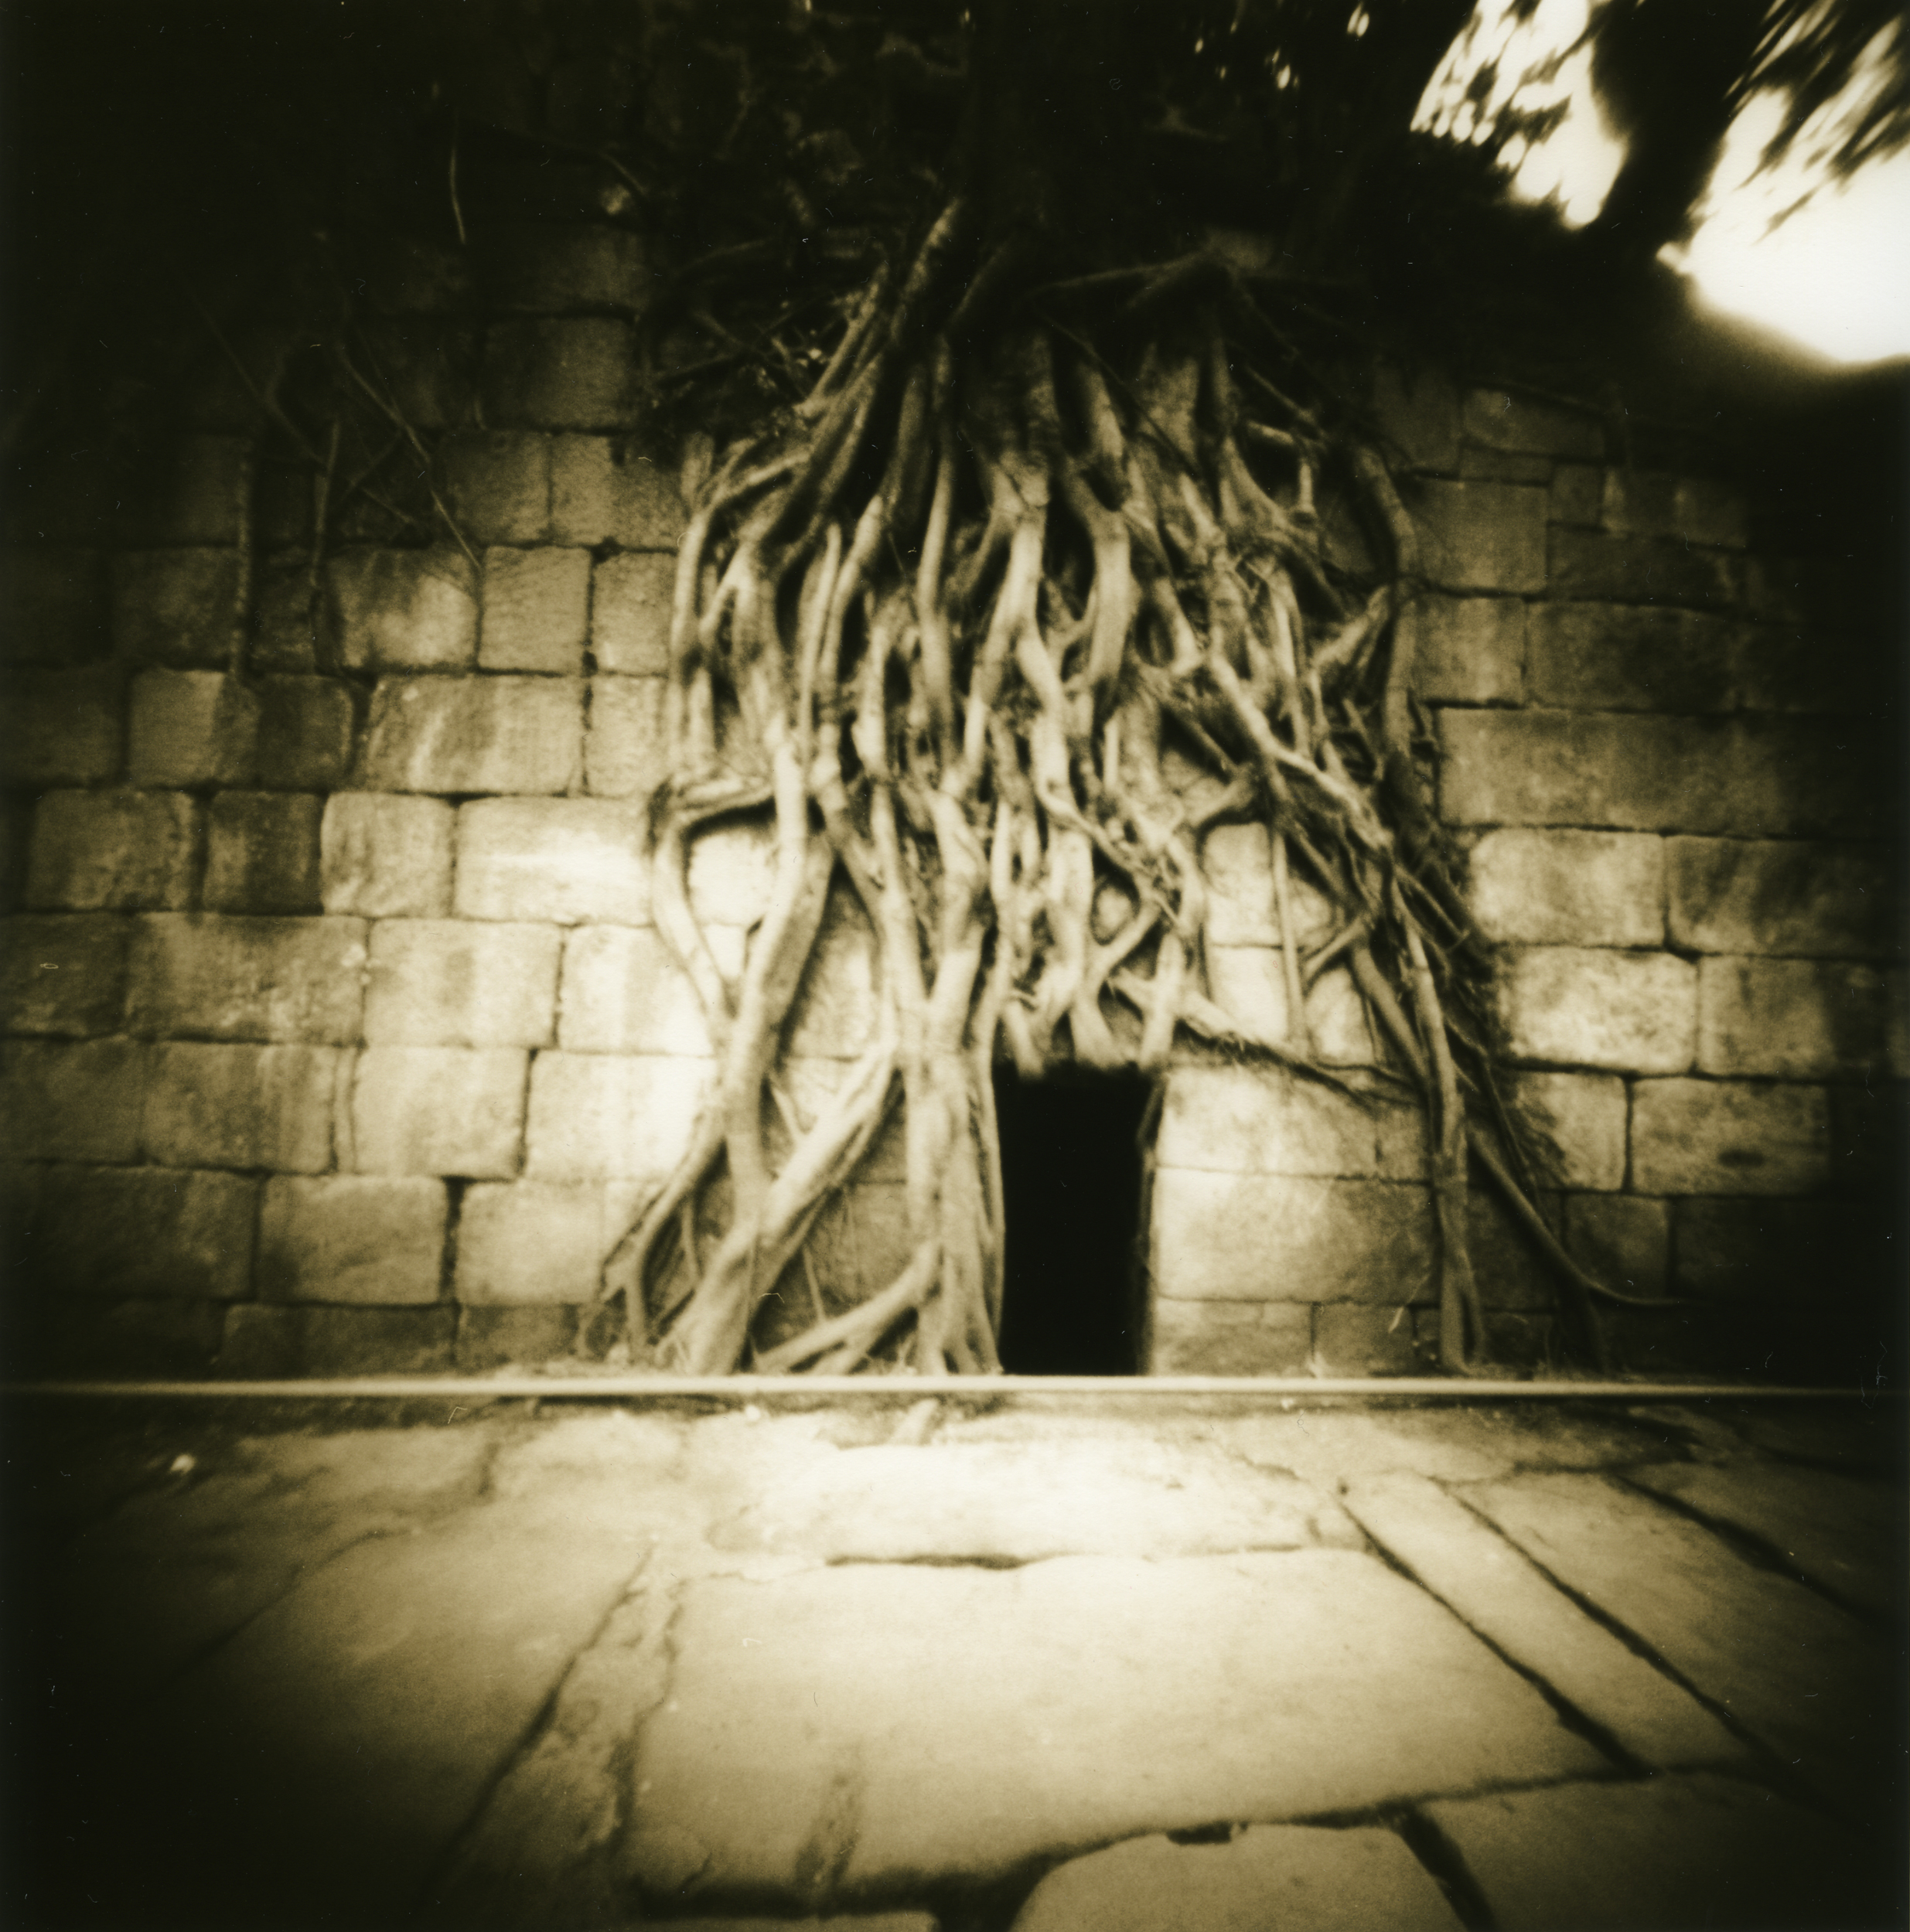 reaching roots tree_[300dpi]